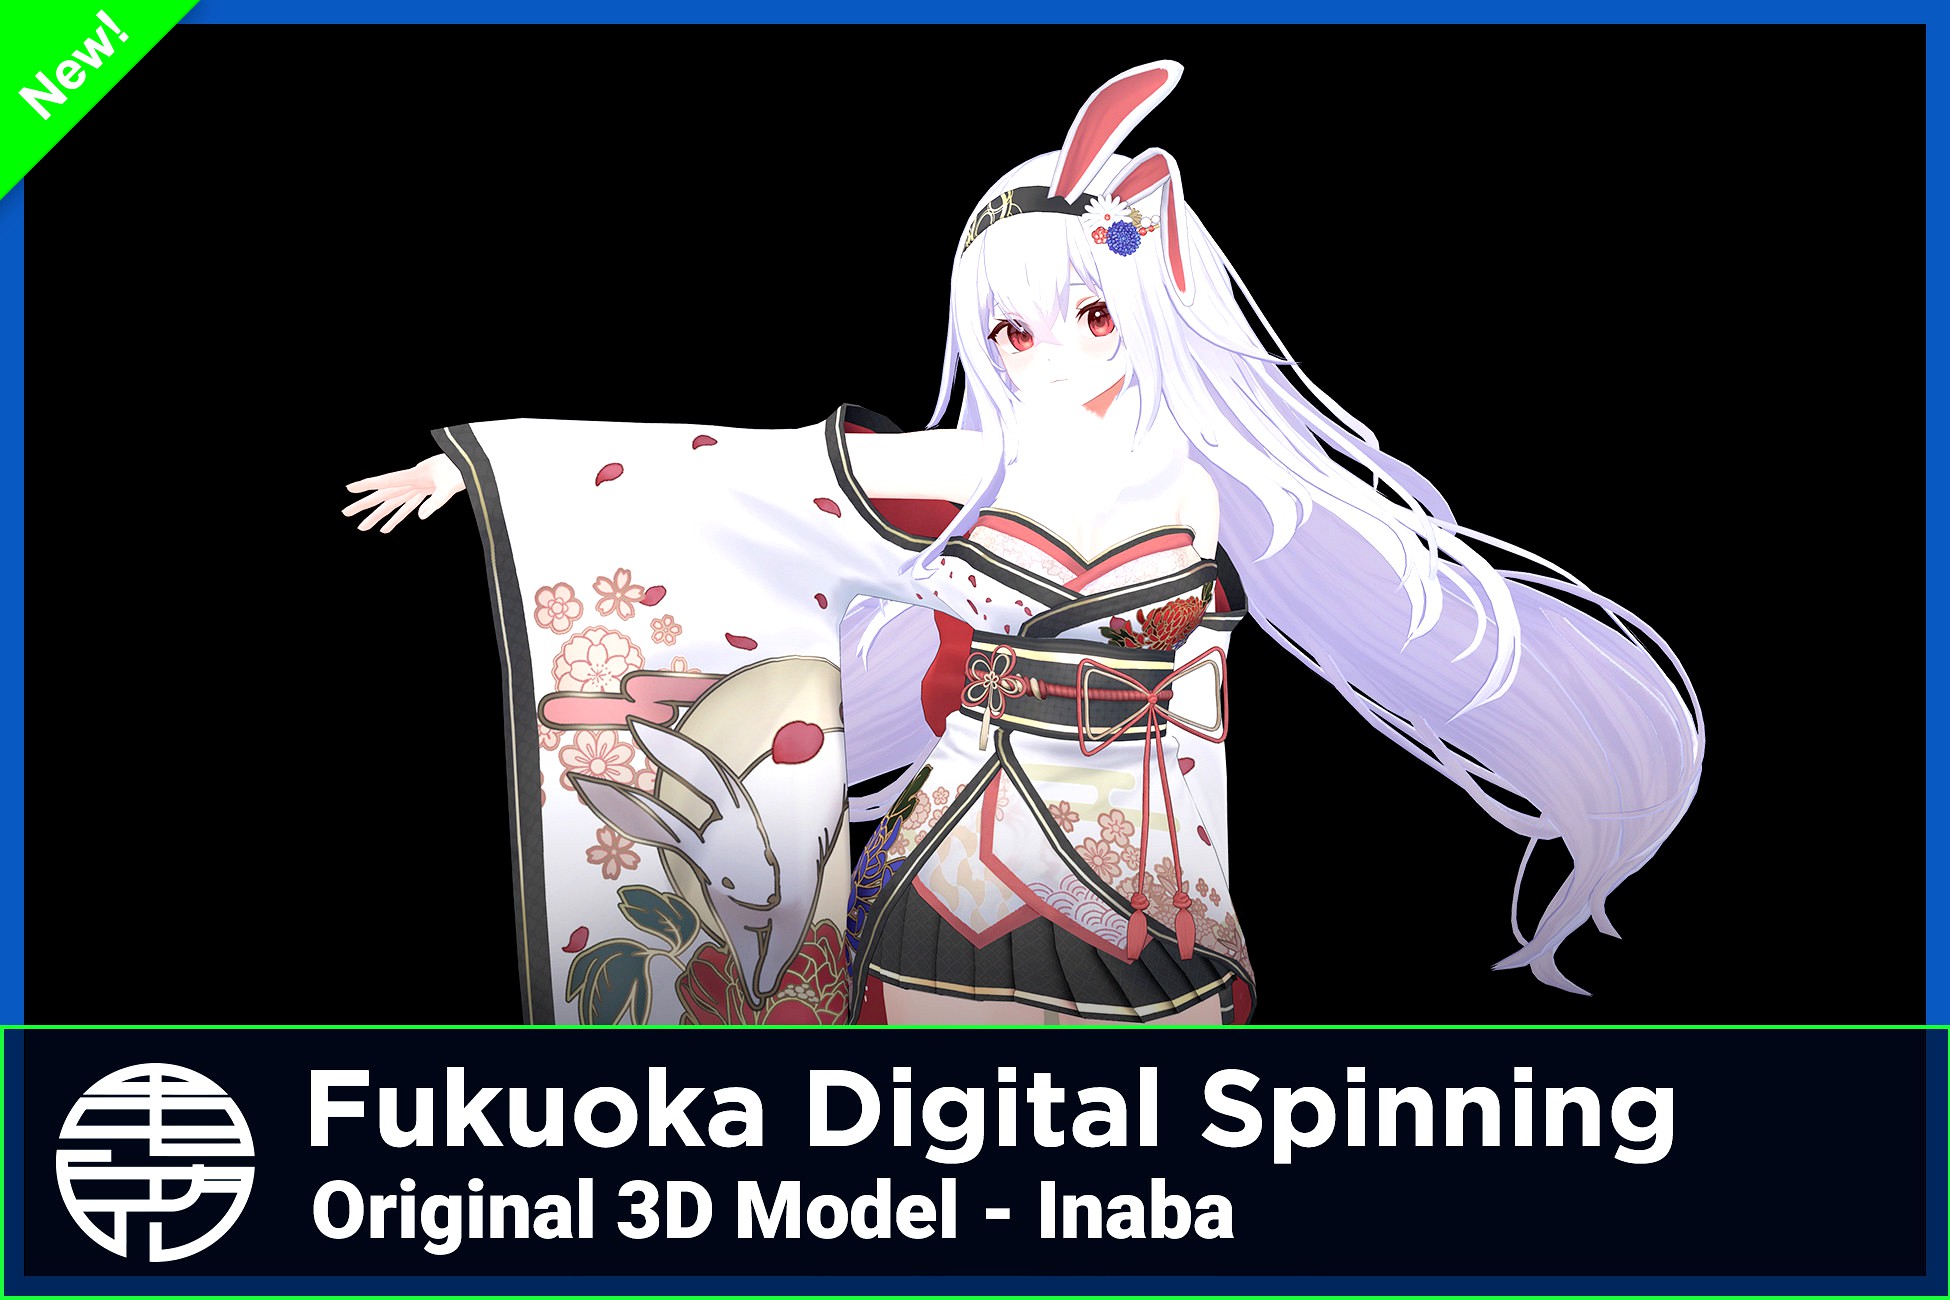 Original 3D model - INABA